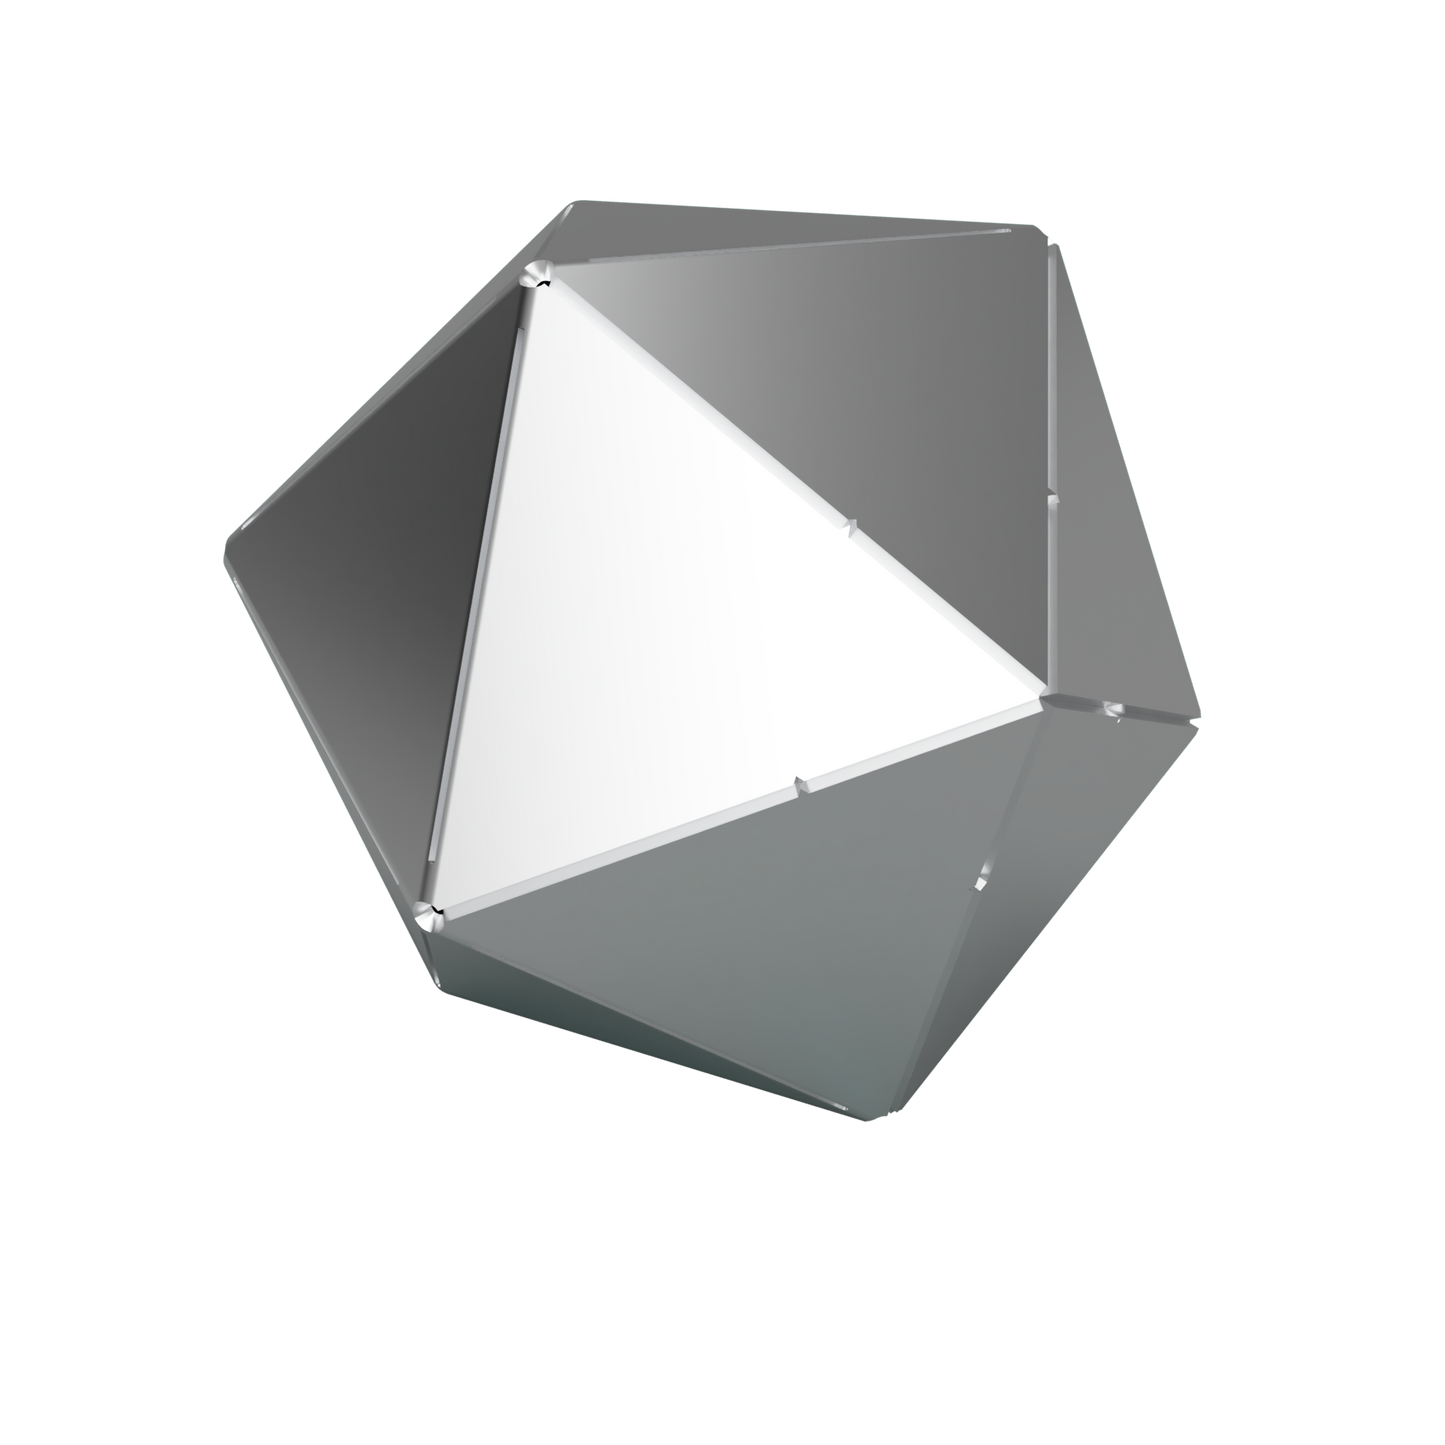 20 Sided Dice (Icosahedron) (USA FREE SHIPPING!!!)